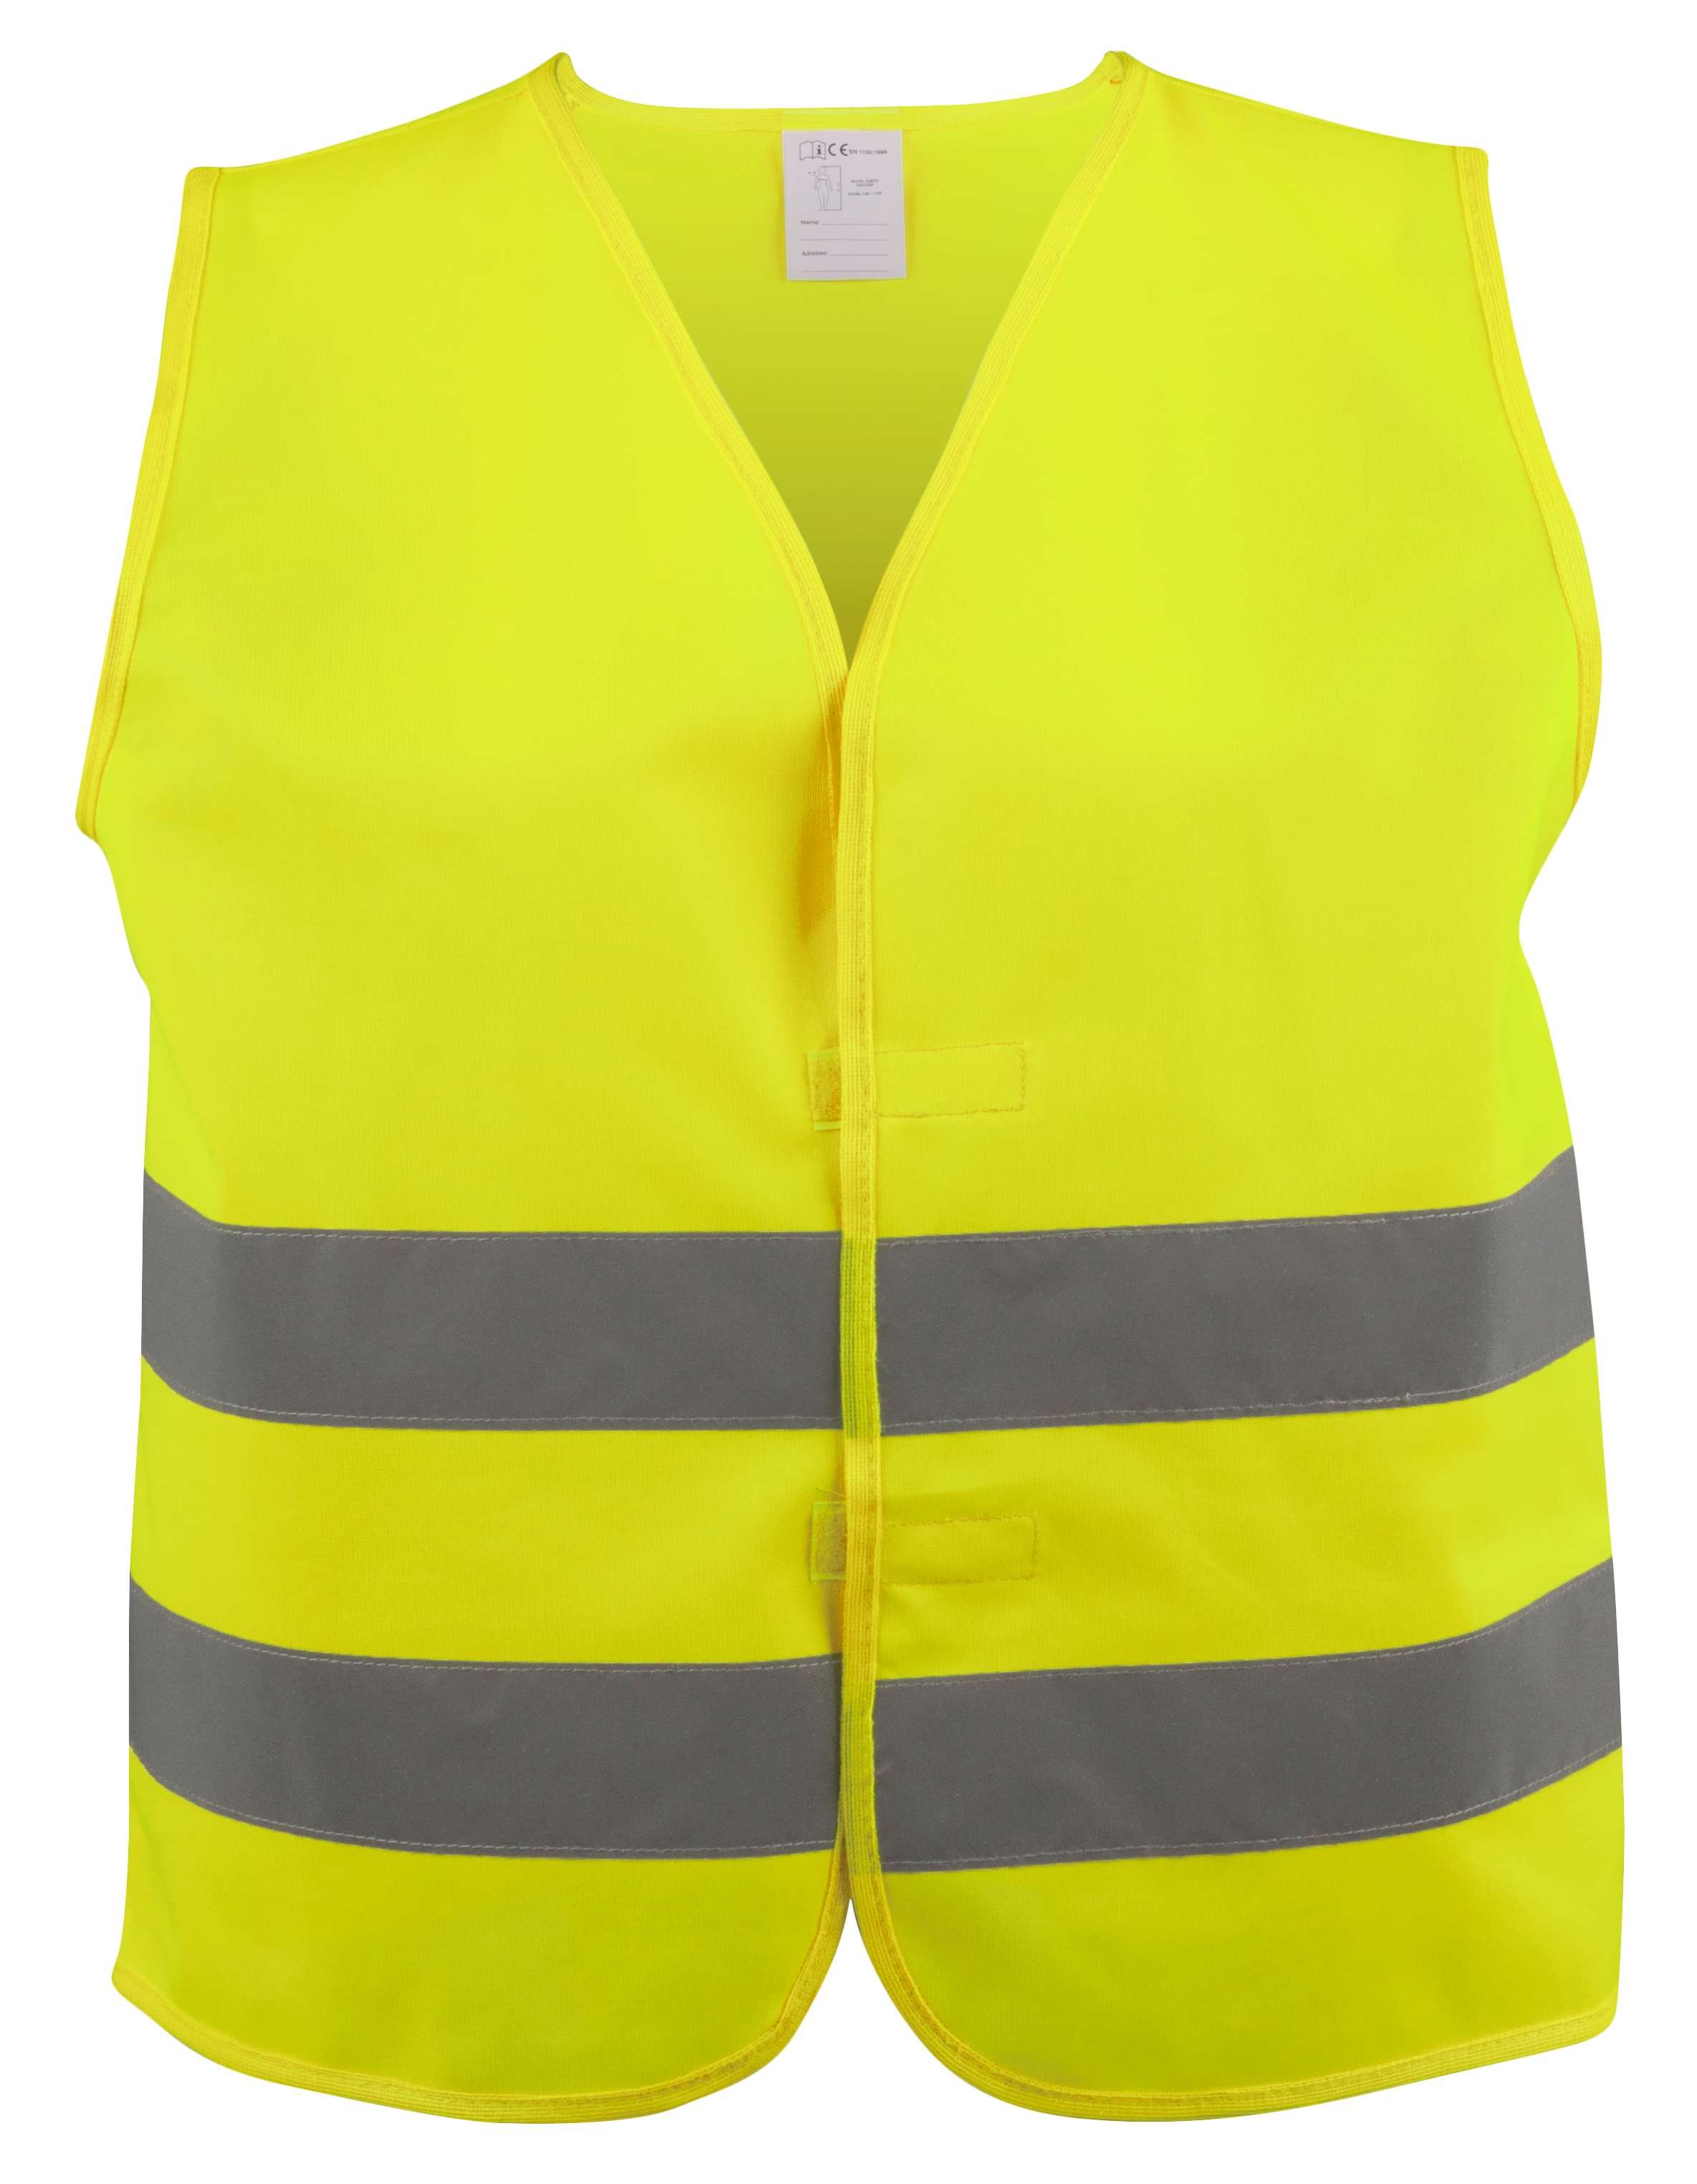 Safety waistcoat, high visibility waistcoat car according to standard EN ISO 20471:2013, protective waistcoat, fluorescent waistcoat adults unisex XXXL (188-194 cm) yellow